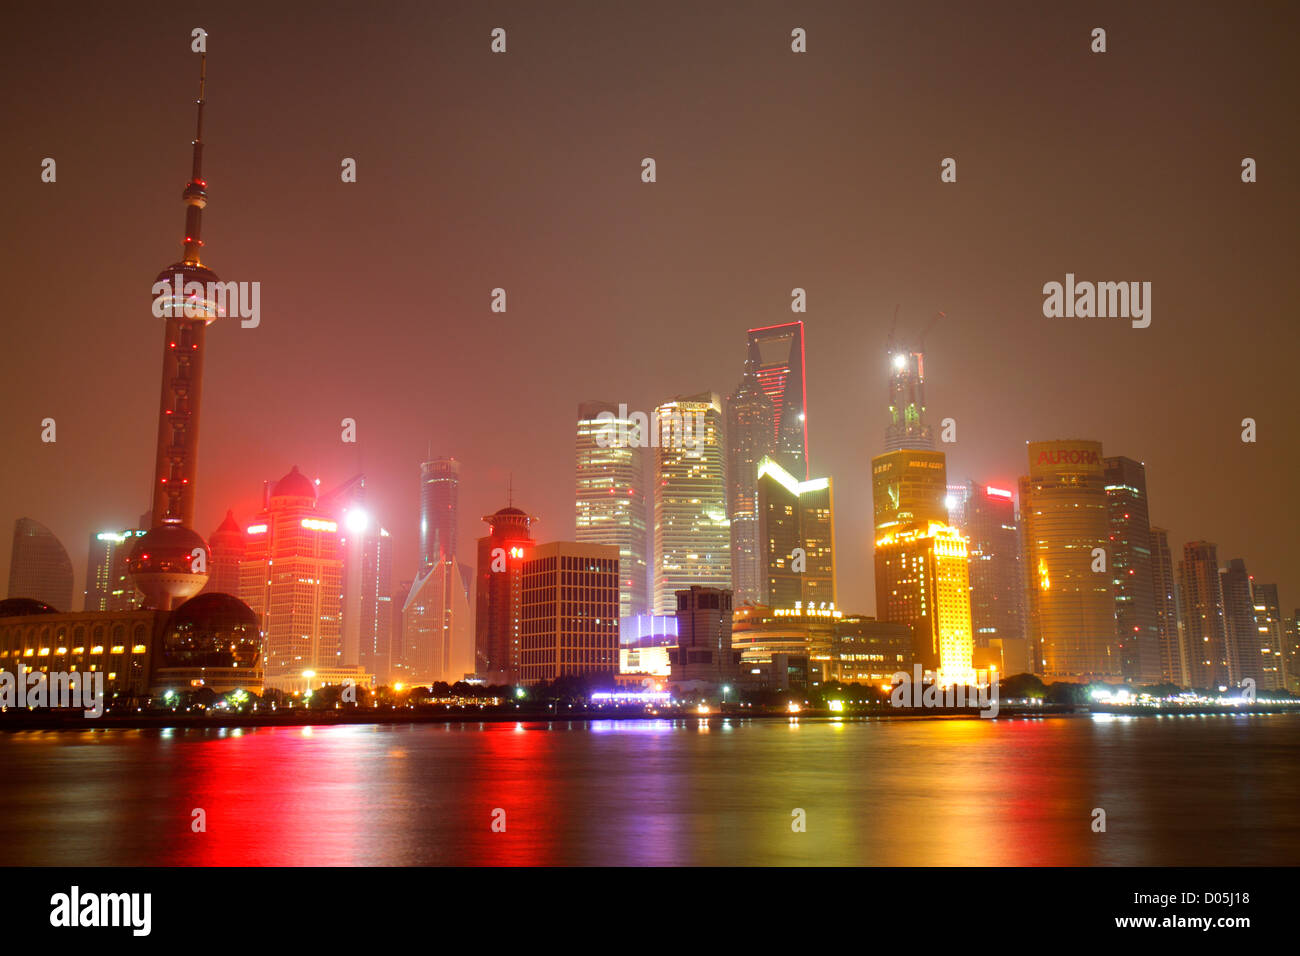 Shanghai China, chinesisches Huangpu Viertel, der Bund, Zhongshan Straße, Huangpu Fluss, Pudong Lujiazui Finanzviertel, Skyline, Oriental Pearl Tower, Shanghai Stockfoto